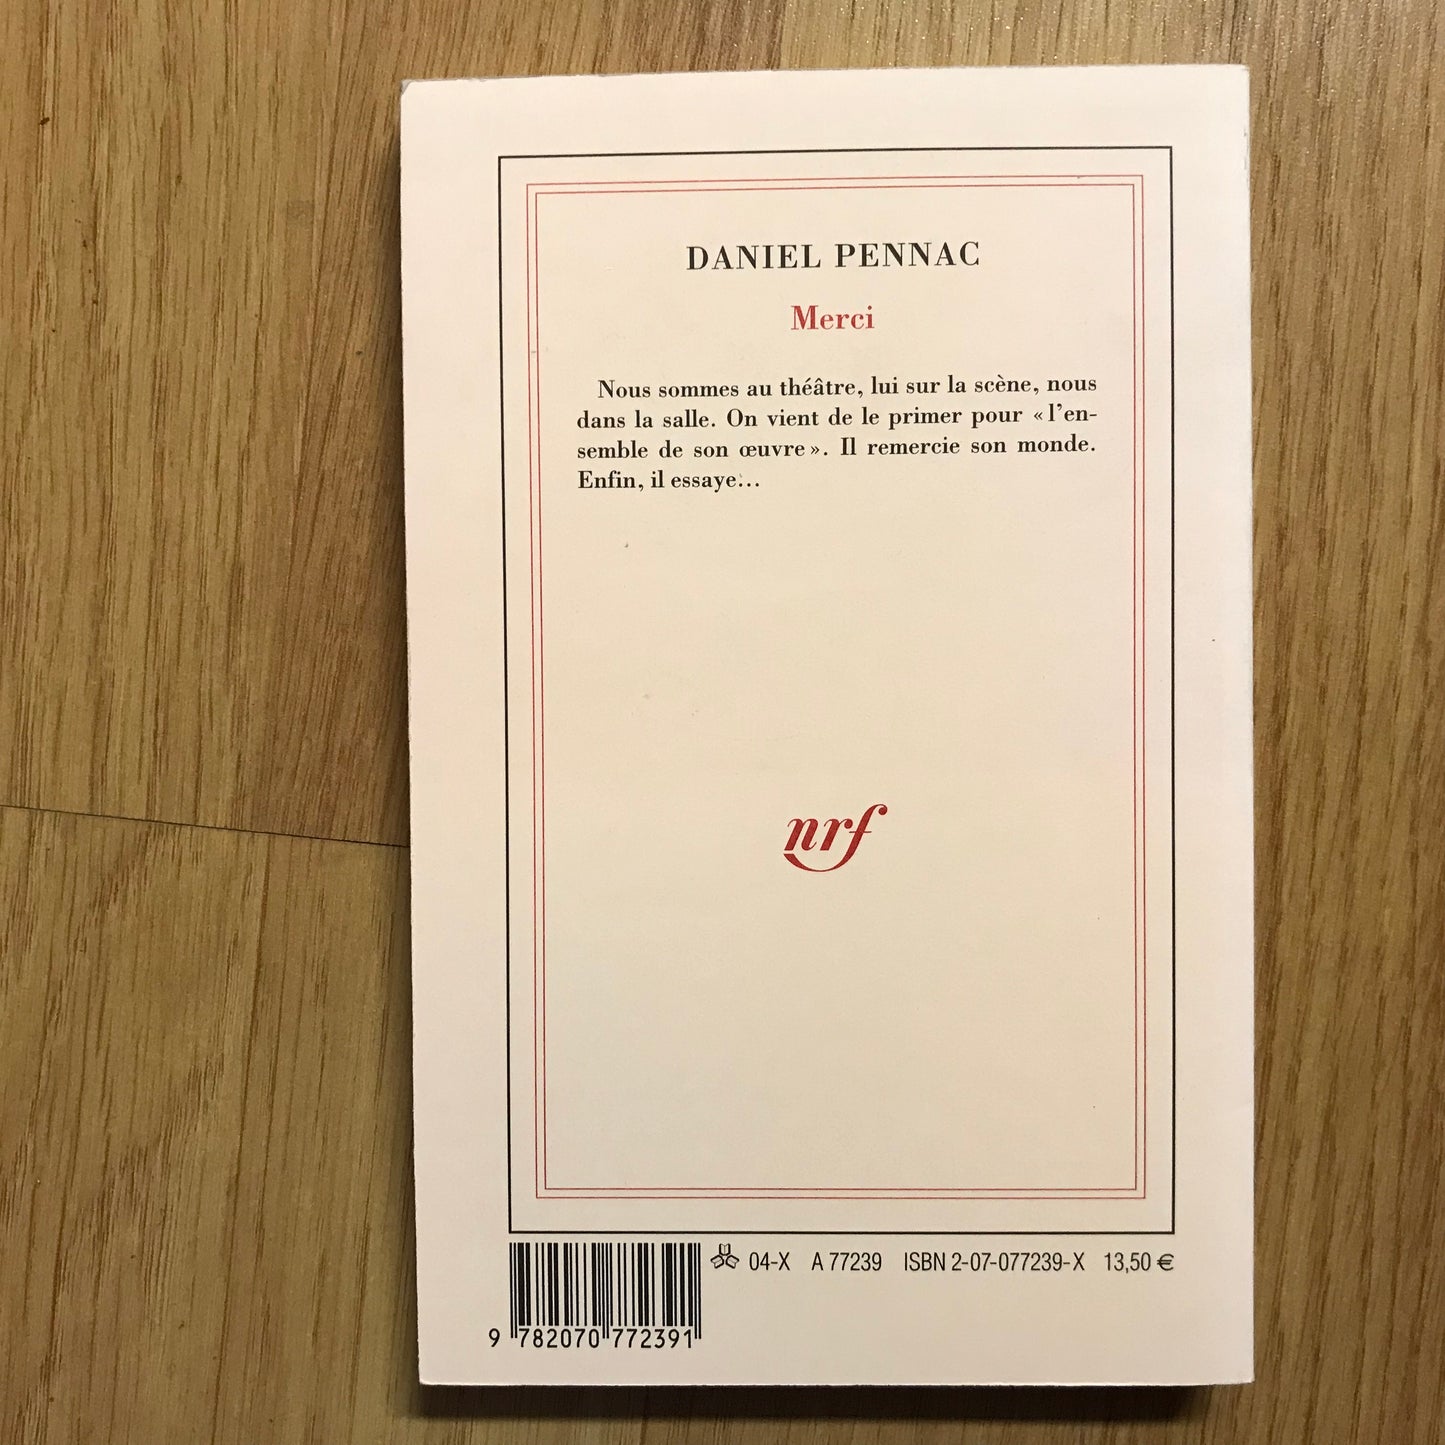 Pennac, Daniel - Merci